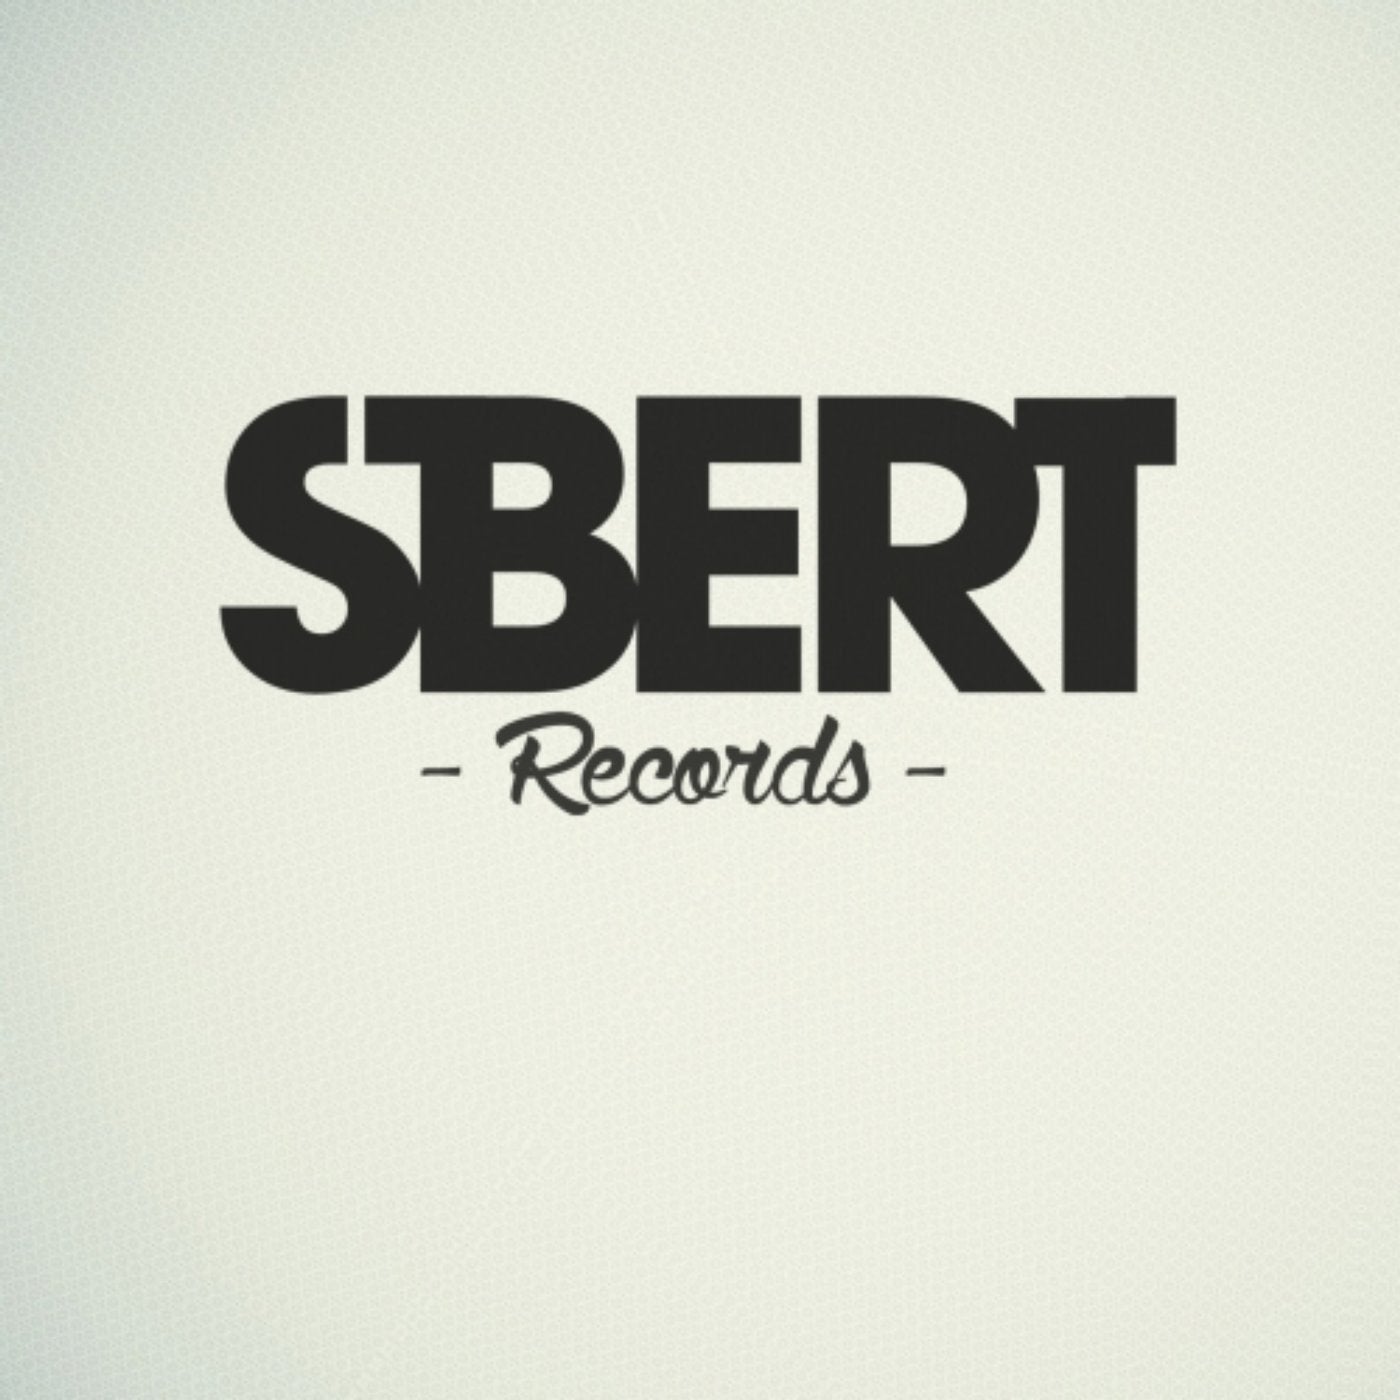 Дэни релиз. Sbert работа. Dani Sbert resolved problem (Original Mix). Sbert